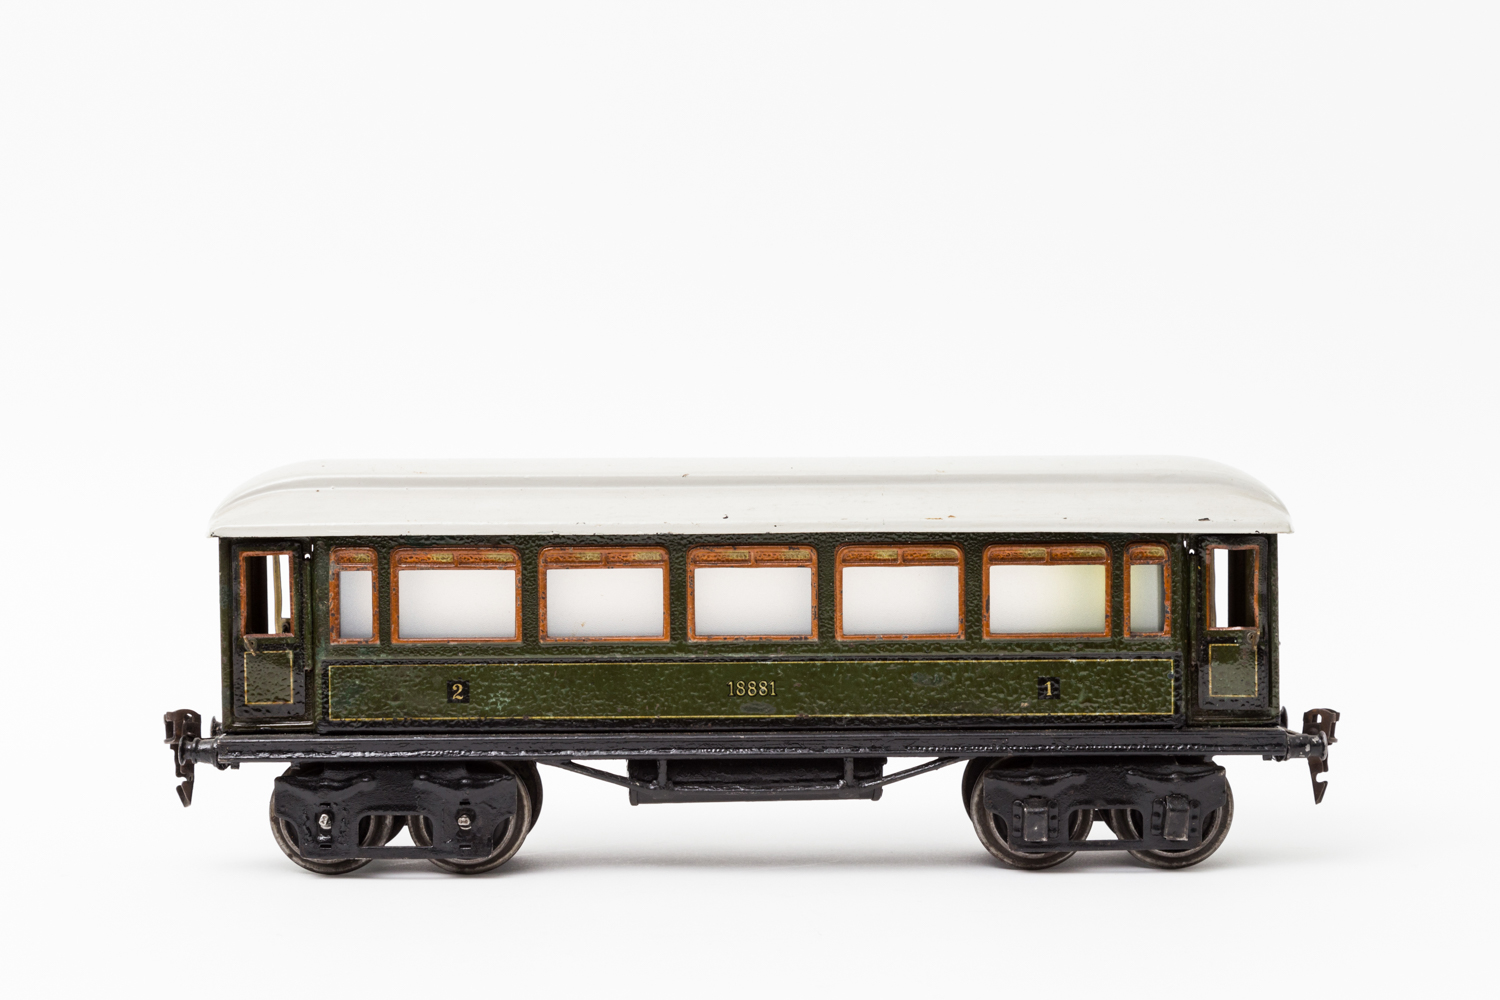 MÄRKLIN Personenwagen 1888 P, Spur 1, 1929-1930, Blech, olivgrün, lithogr., Stirnseiten gemarkt, 4-